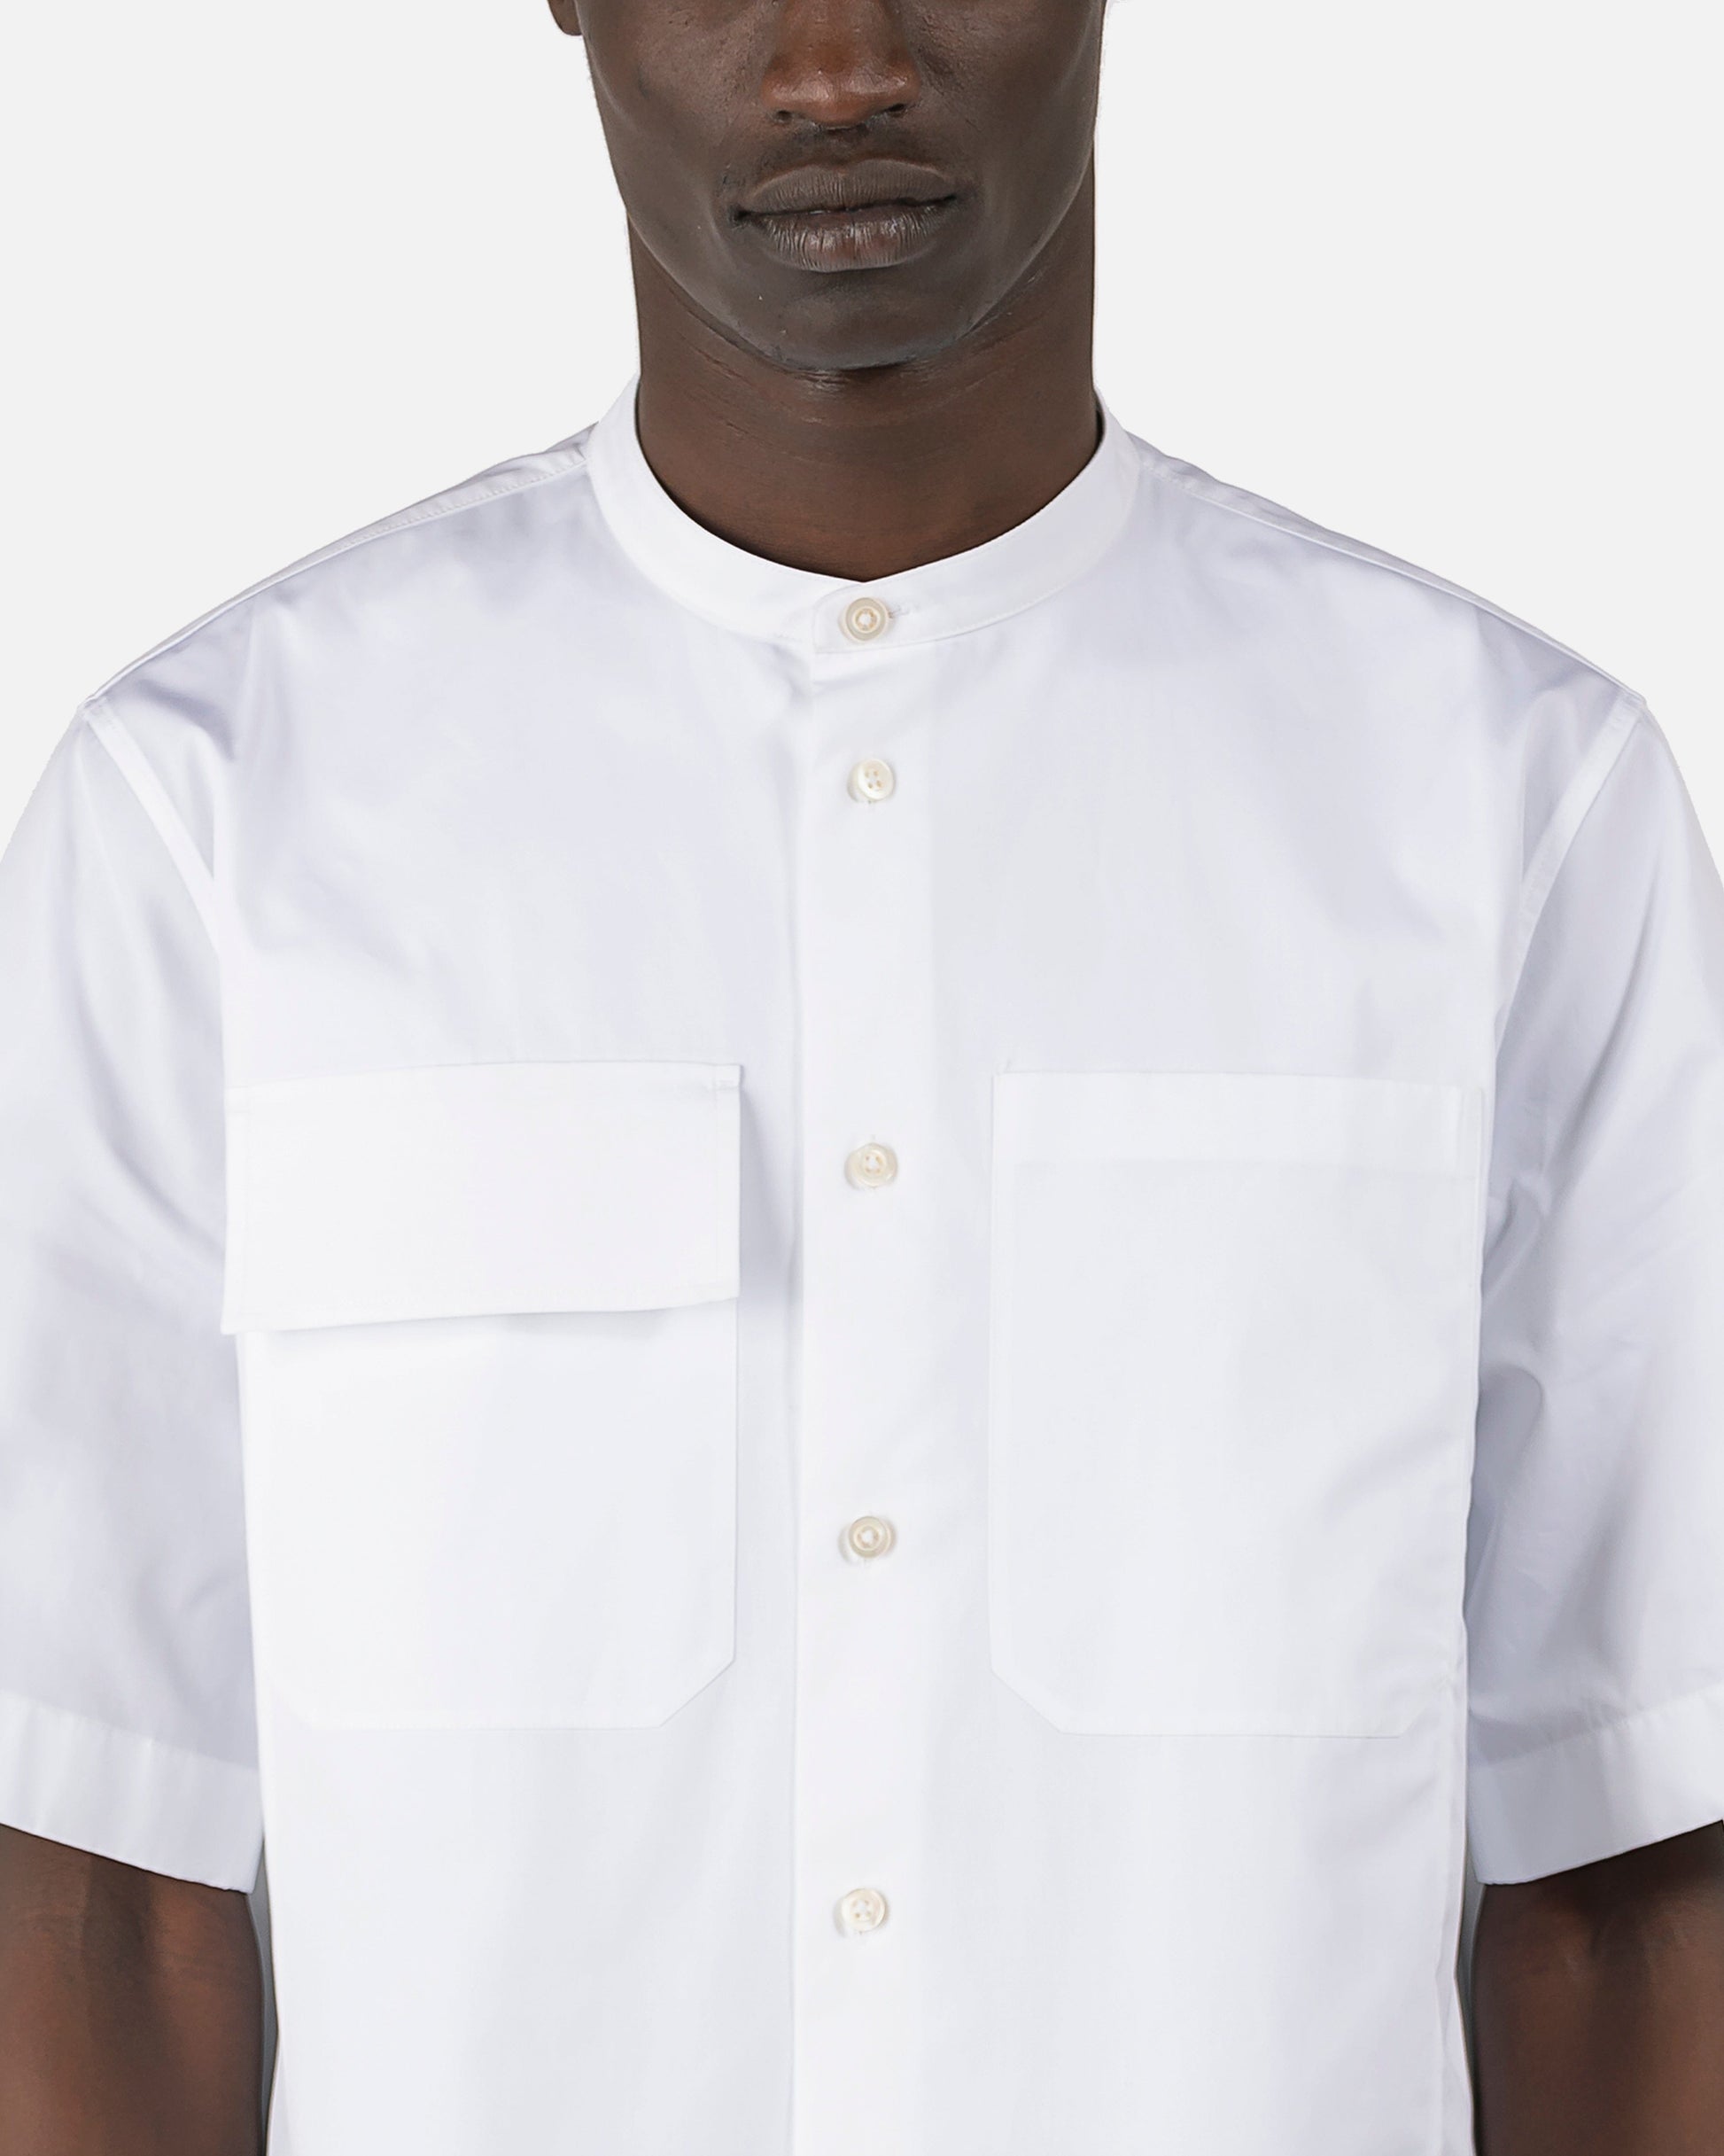 Jil Sander Men's Shirts Short Sleeve Patch Pocket Shirt in White